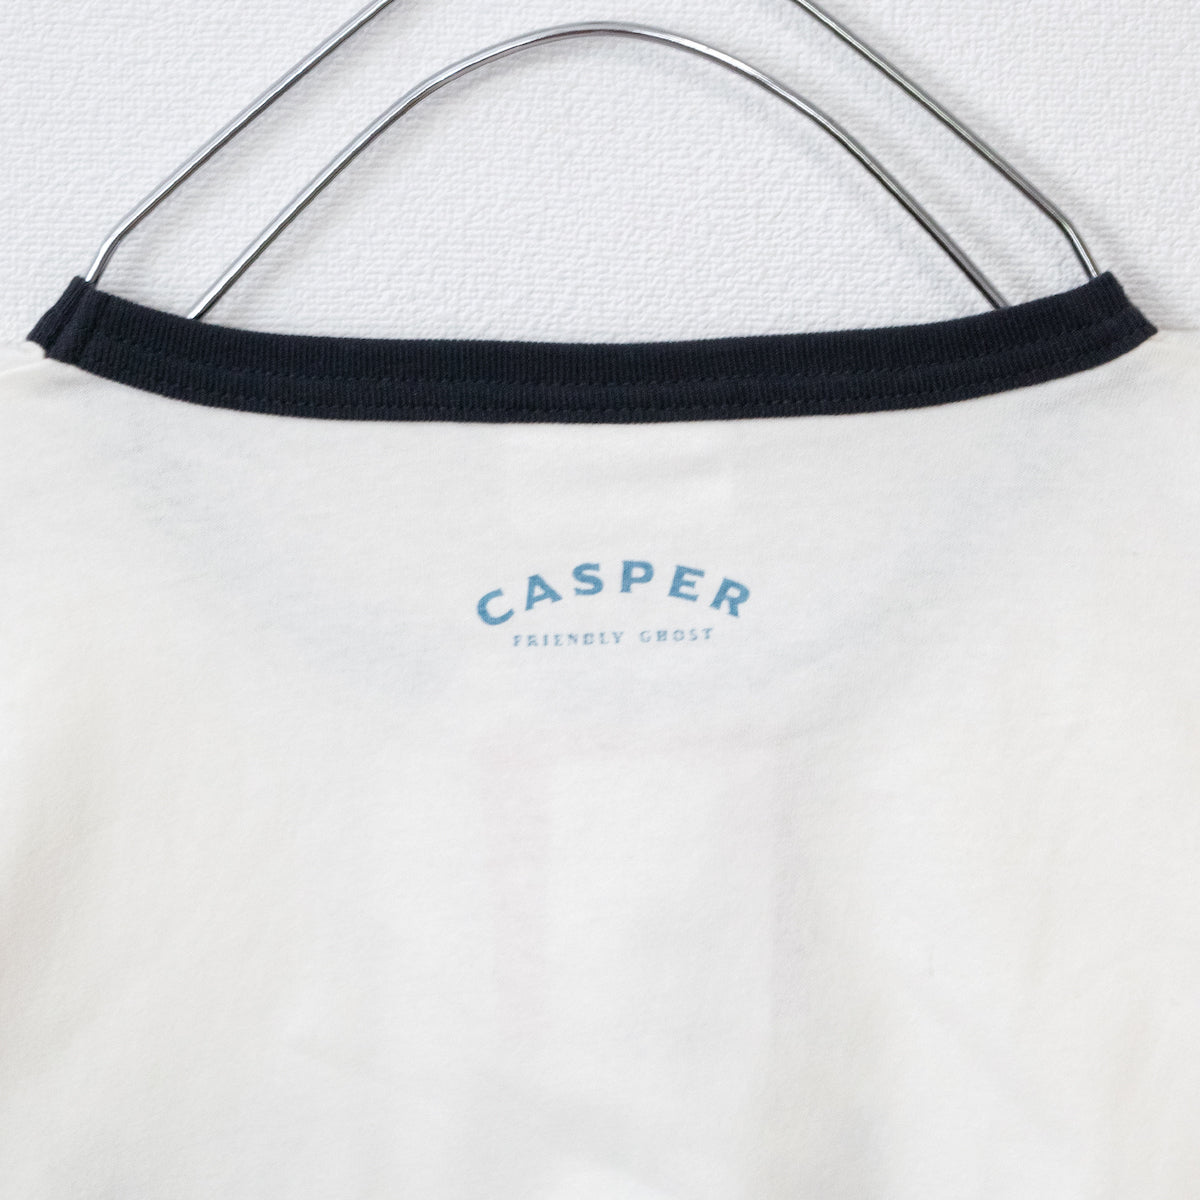 Casper キャスパー リンガーTシャツ WHITE